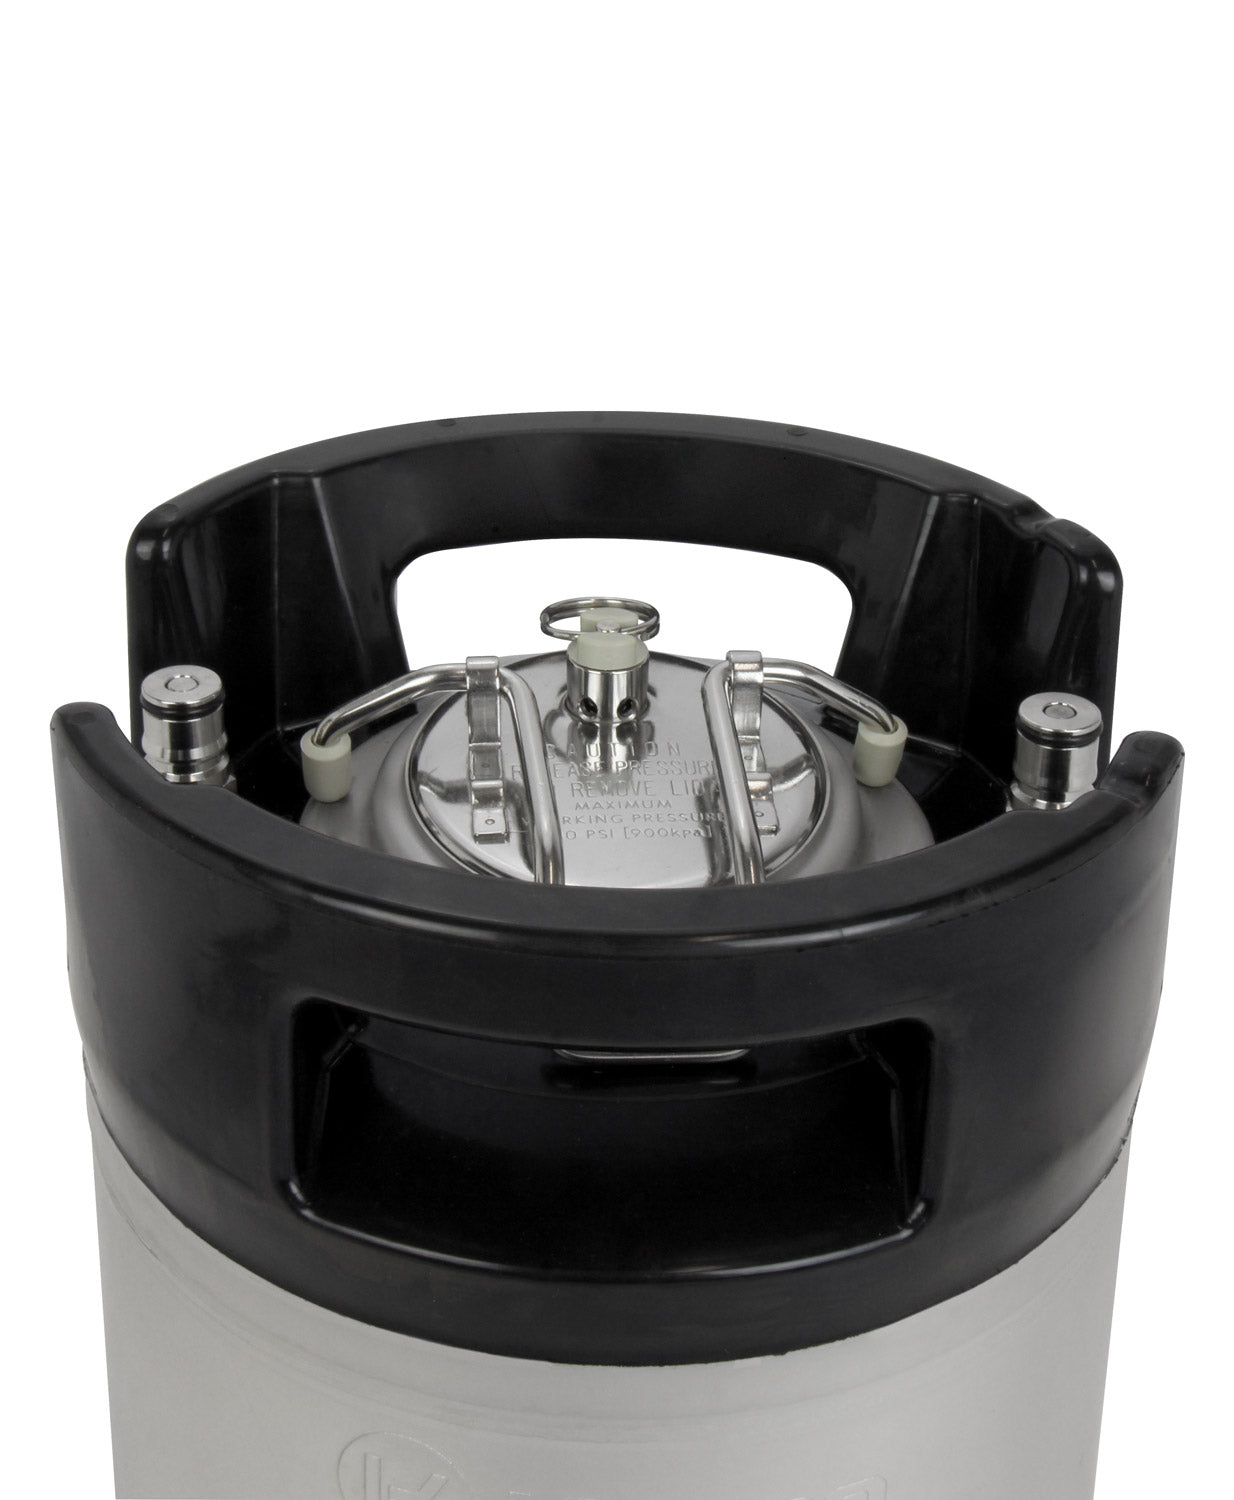 1.75 Gallon Ball Lock Keg - Rubber Handle